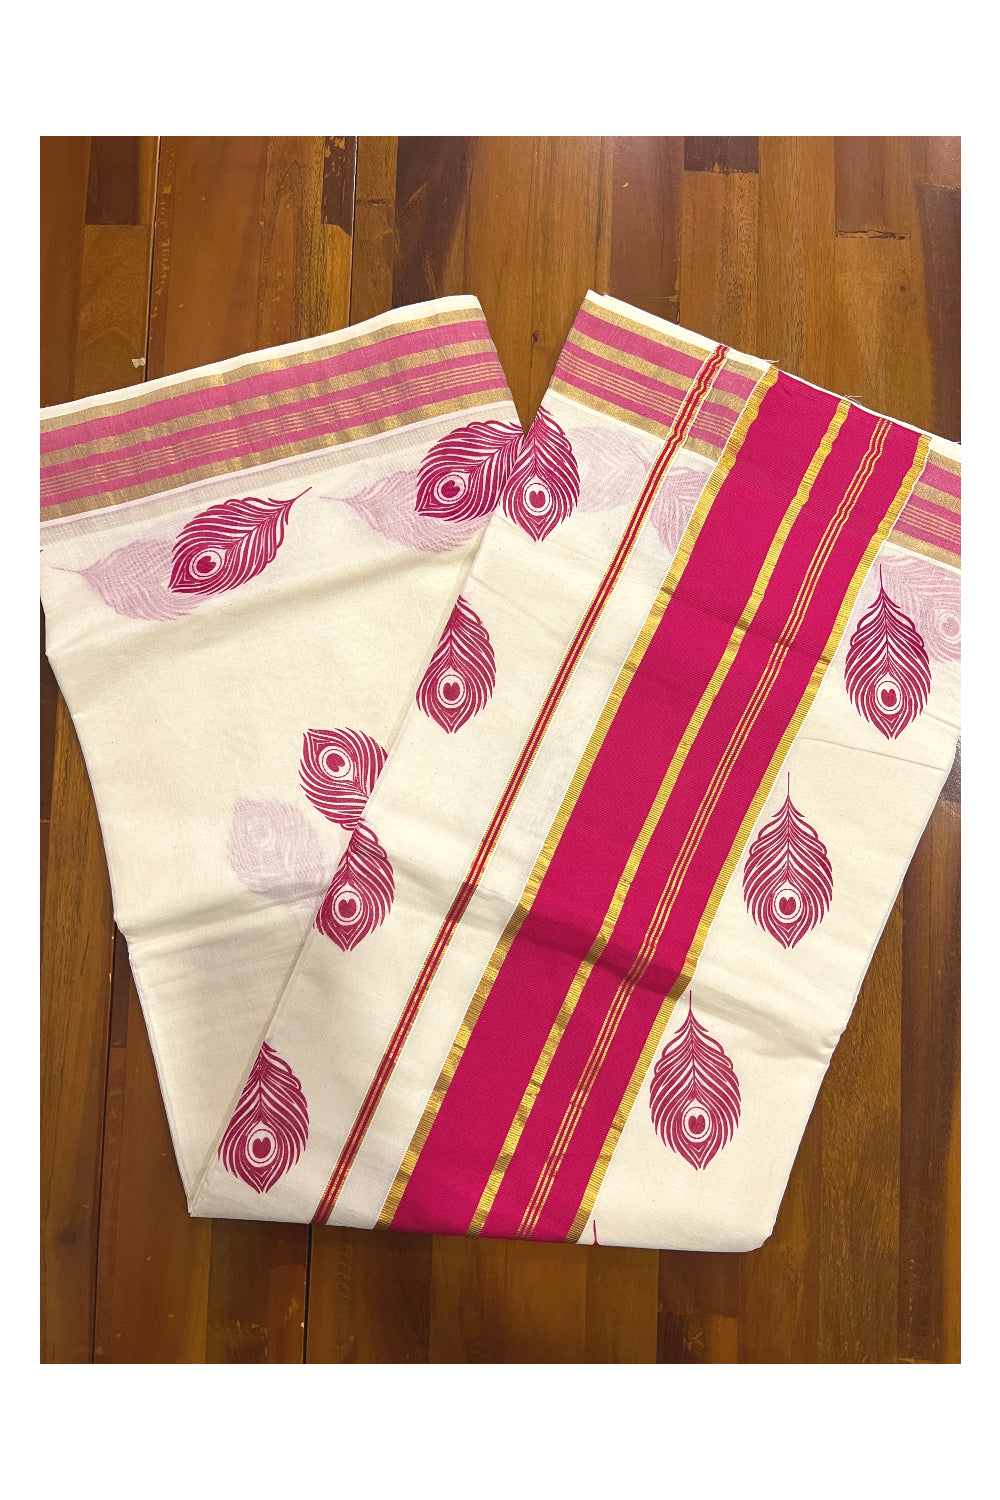 Pure Cotton Kerala Saree with Kasavu and Dark Pink Feather Block Prints on Border